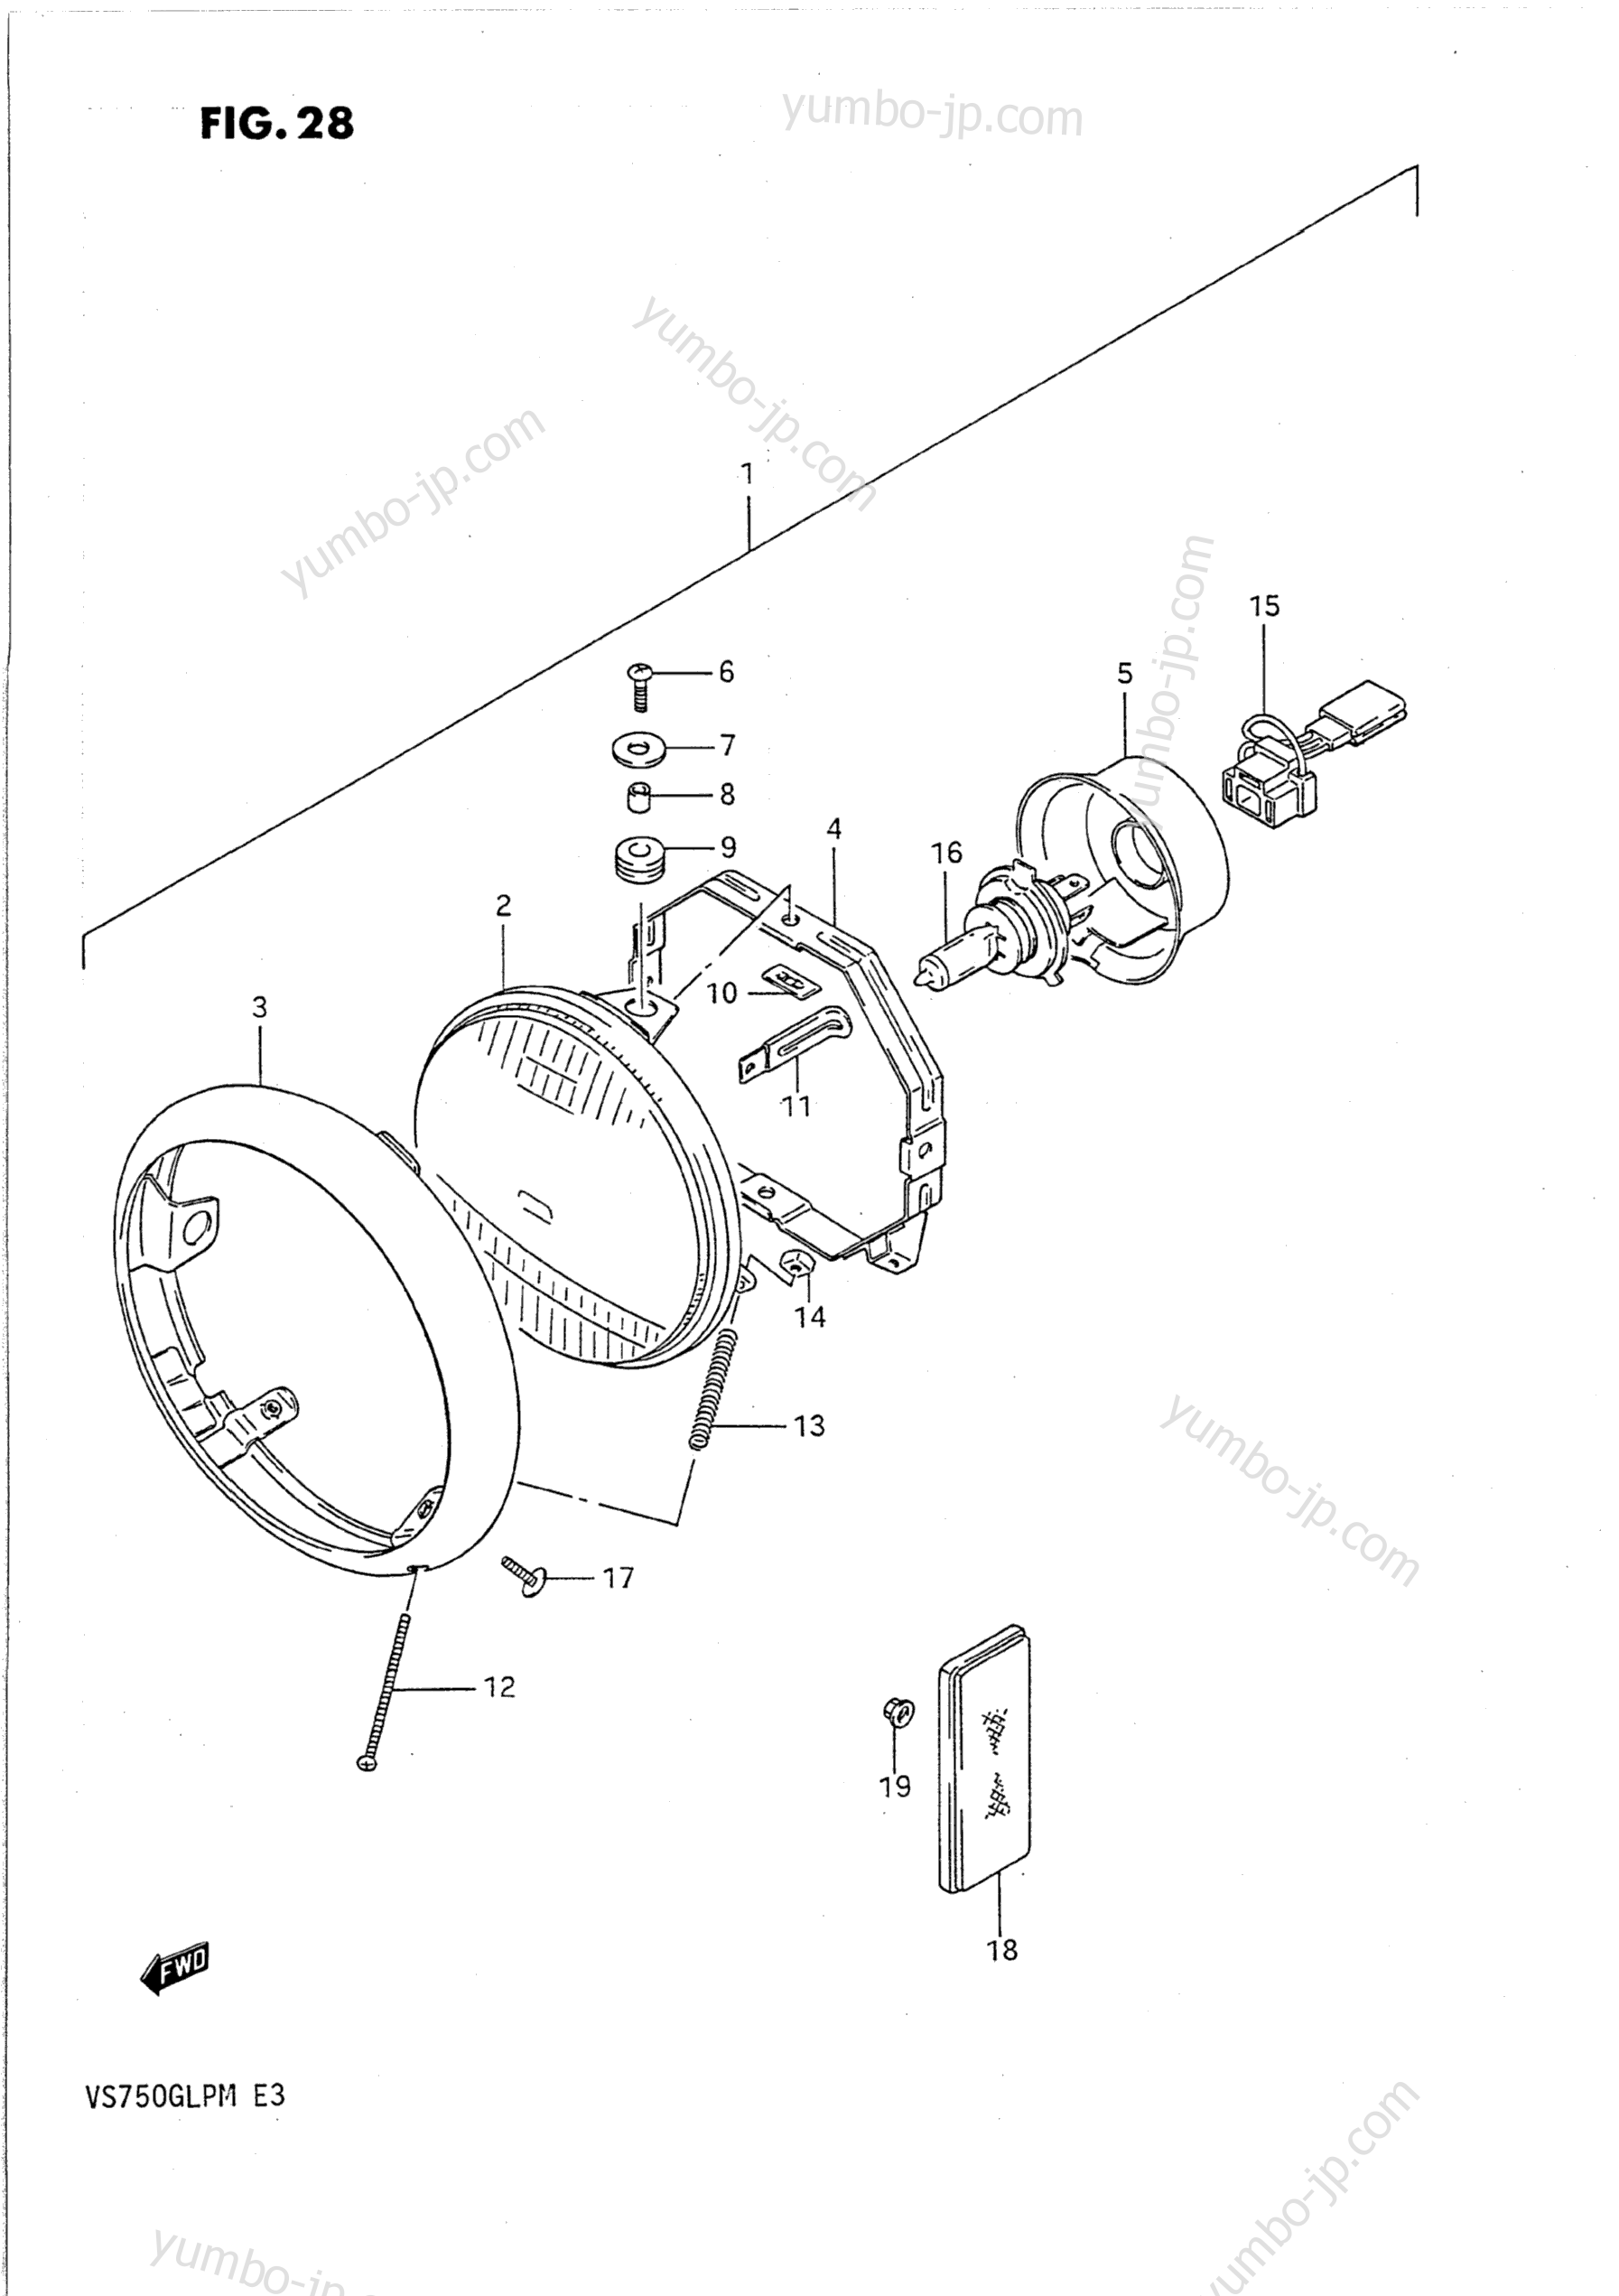 HEADLAMP for motorcycles SUZUKI Intruder (VS750GLP) 1989 year